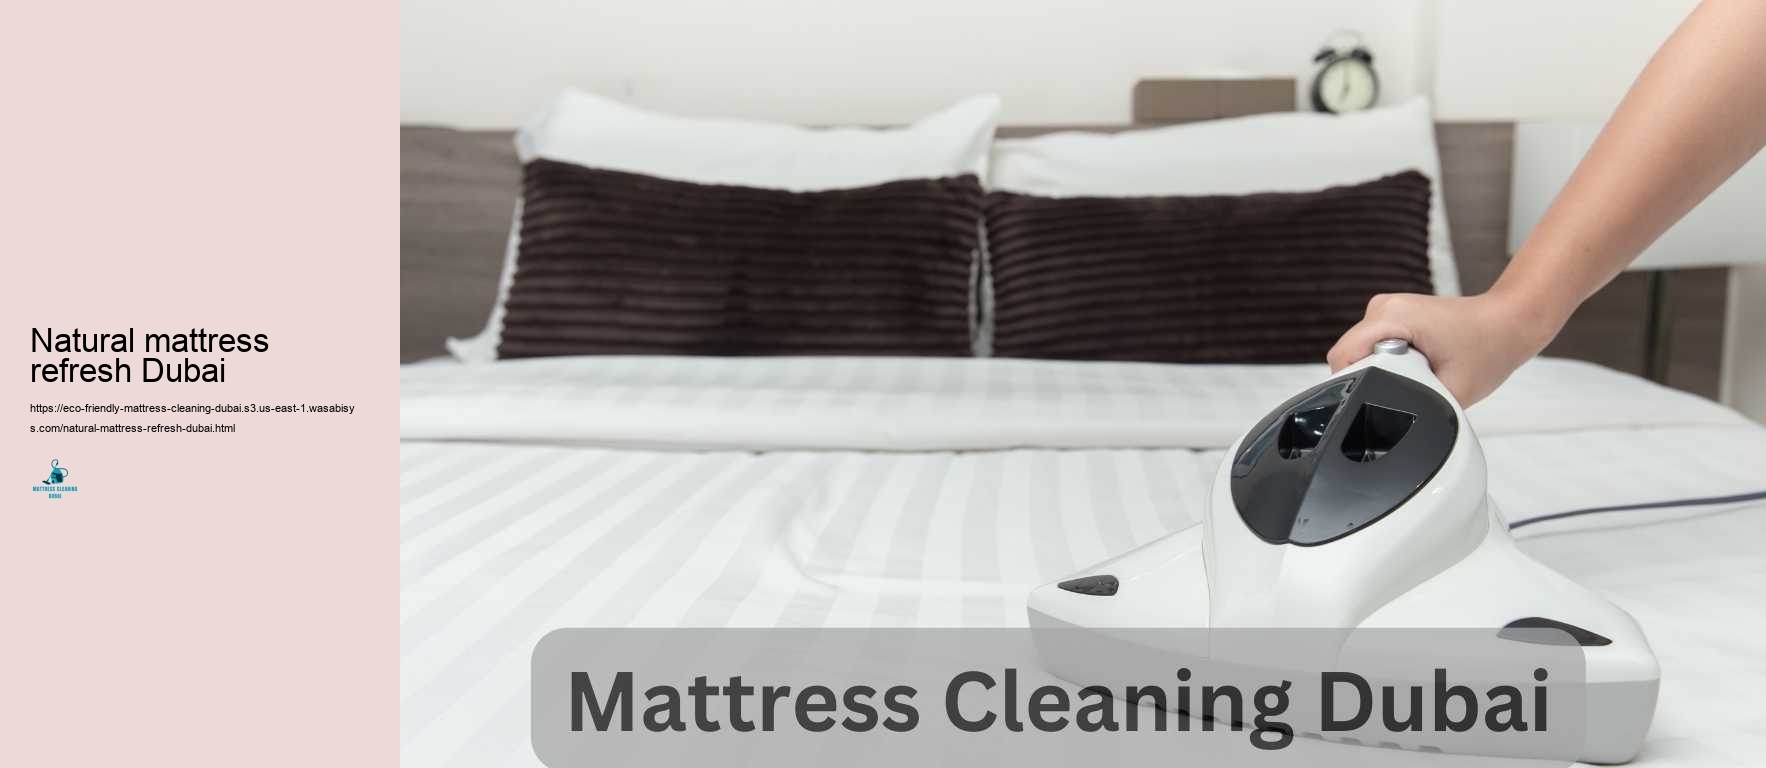 Natural mattress refresh Dubai